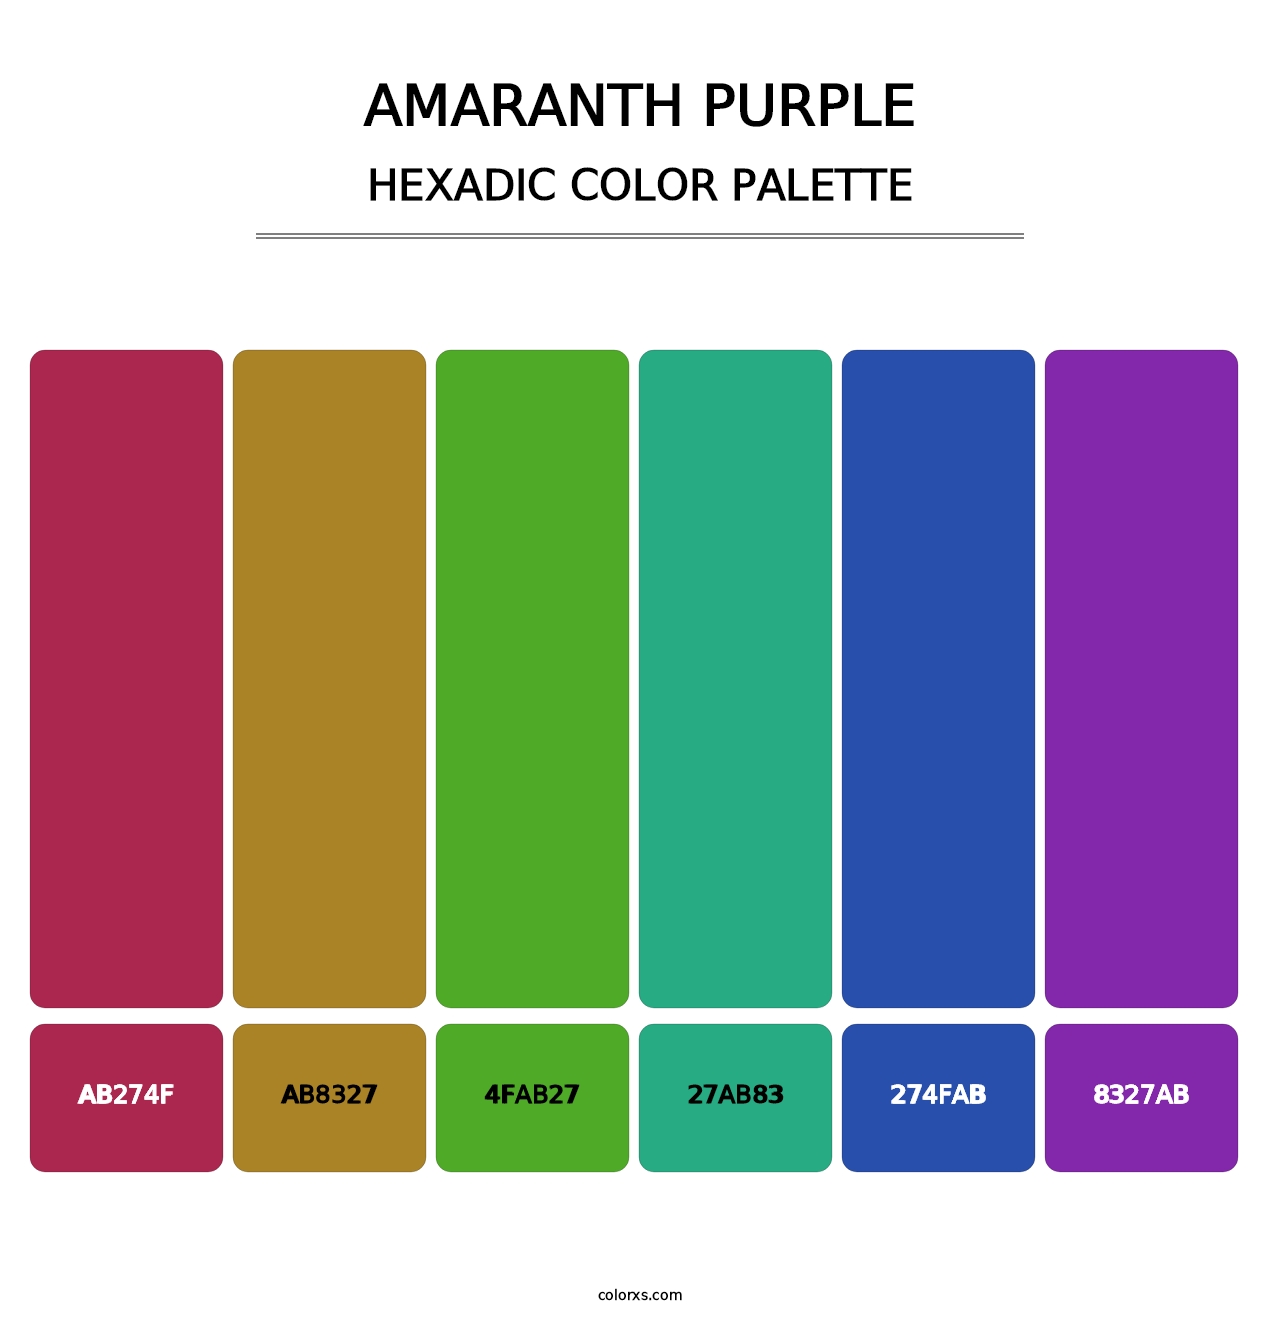 Amaranth Purple - Hexadic Color Palette